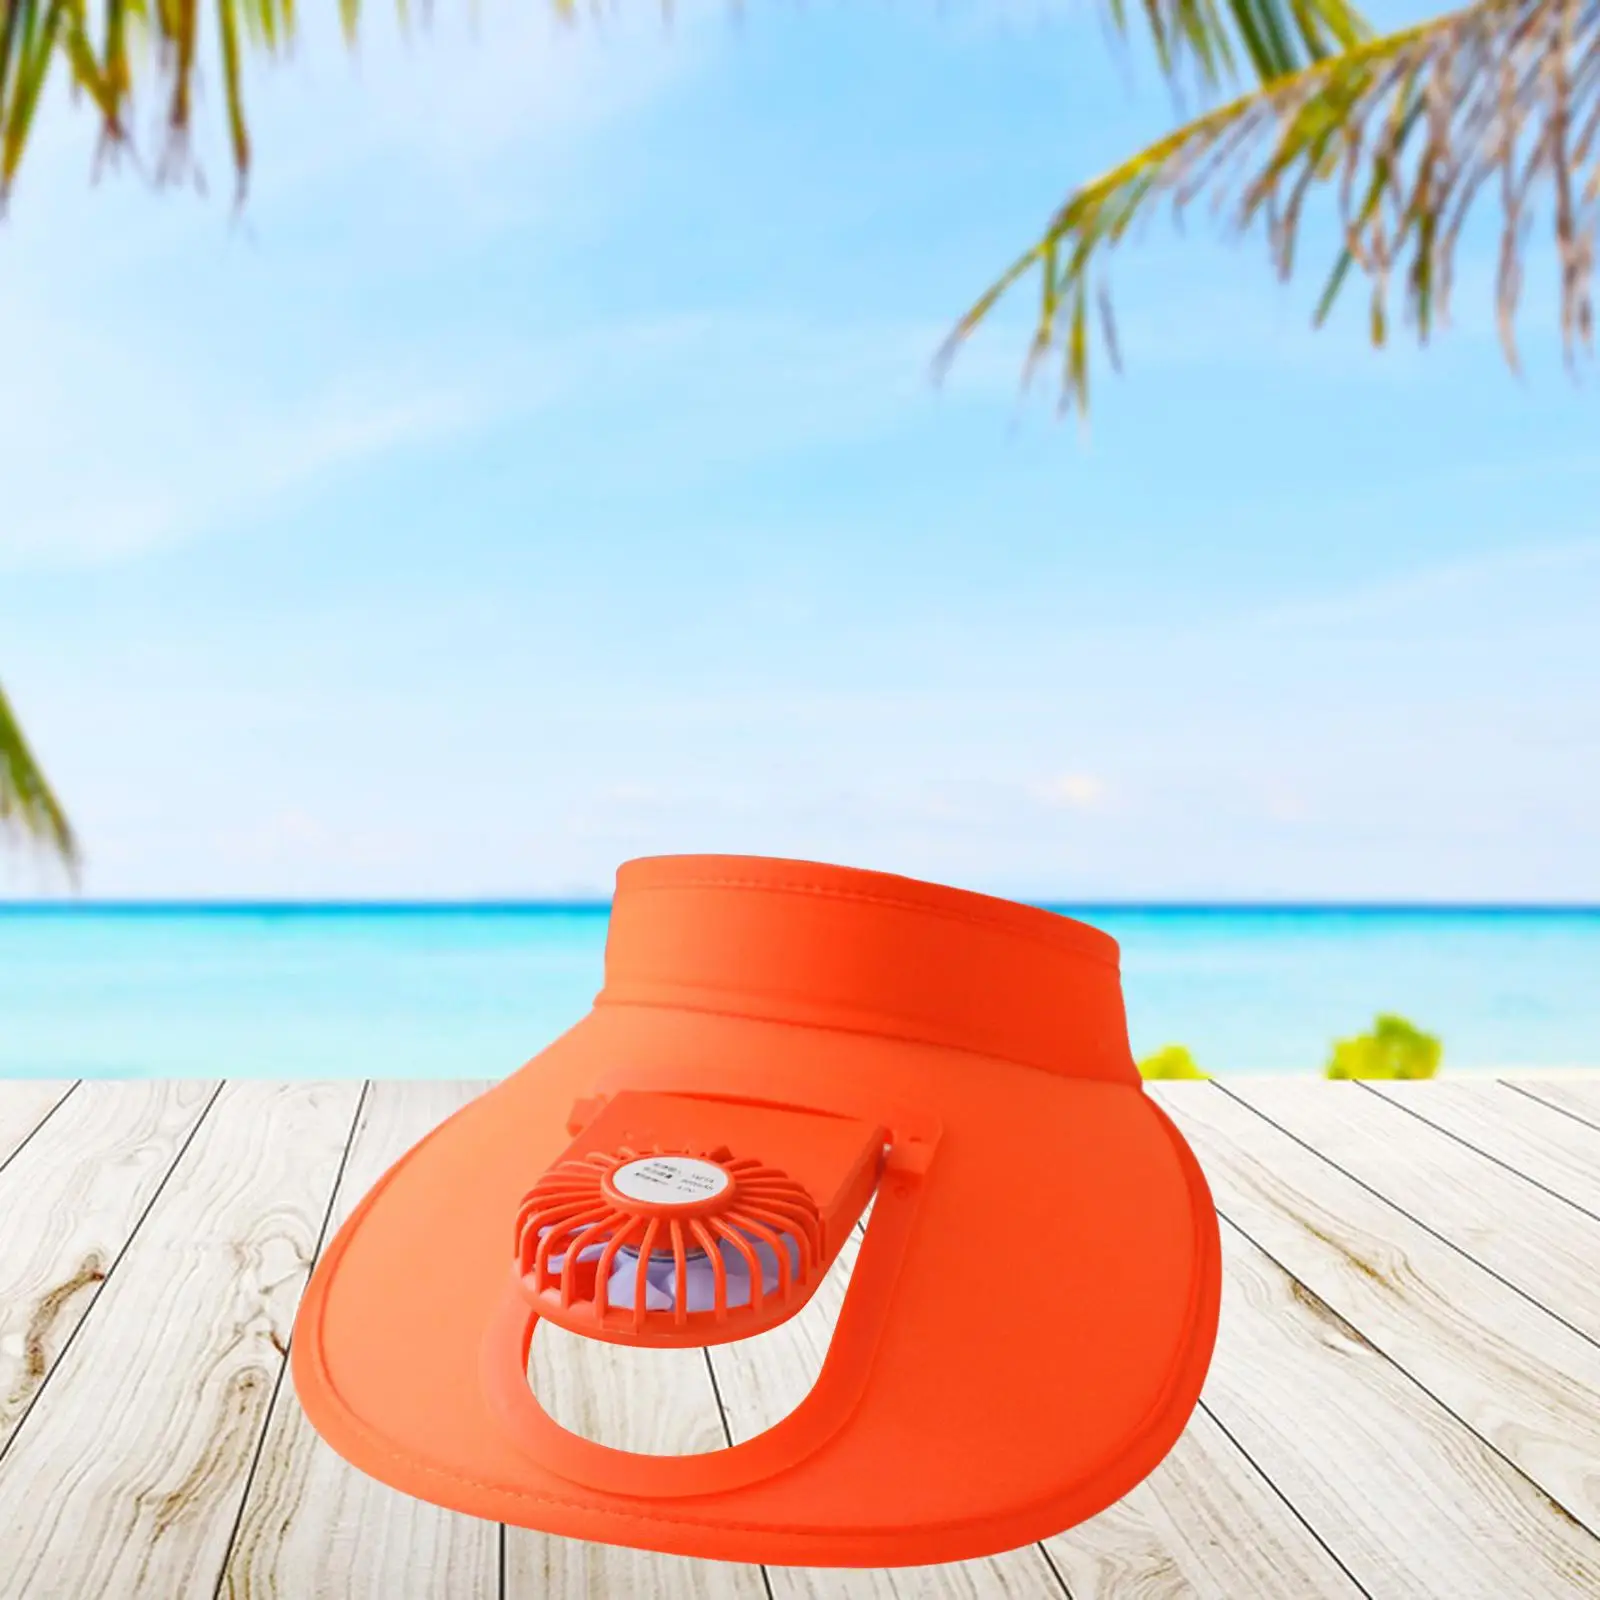 Sun Visor Hat with Fan, Fan Visor HatSummer Beach Hat for Adult Kids USB Powered Cooling Fan Hat for Hiking Outdoor Sports